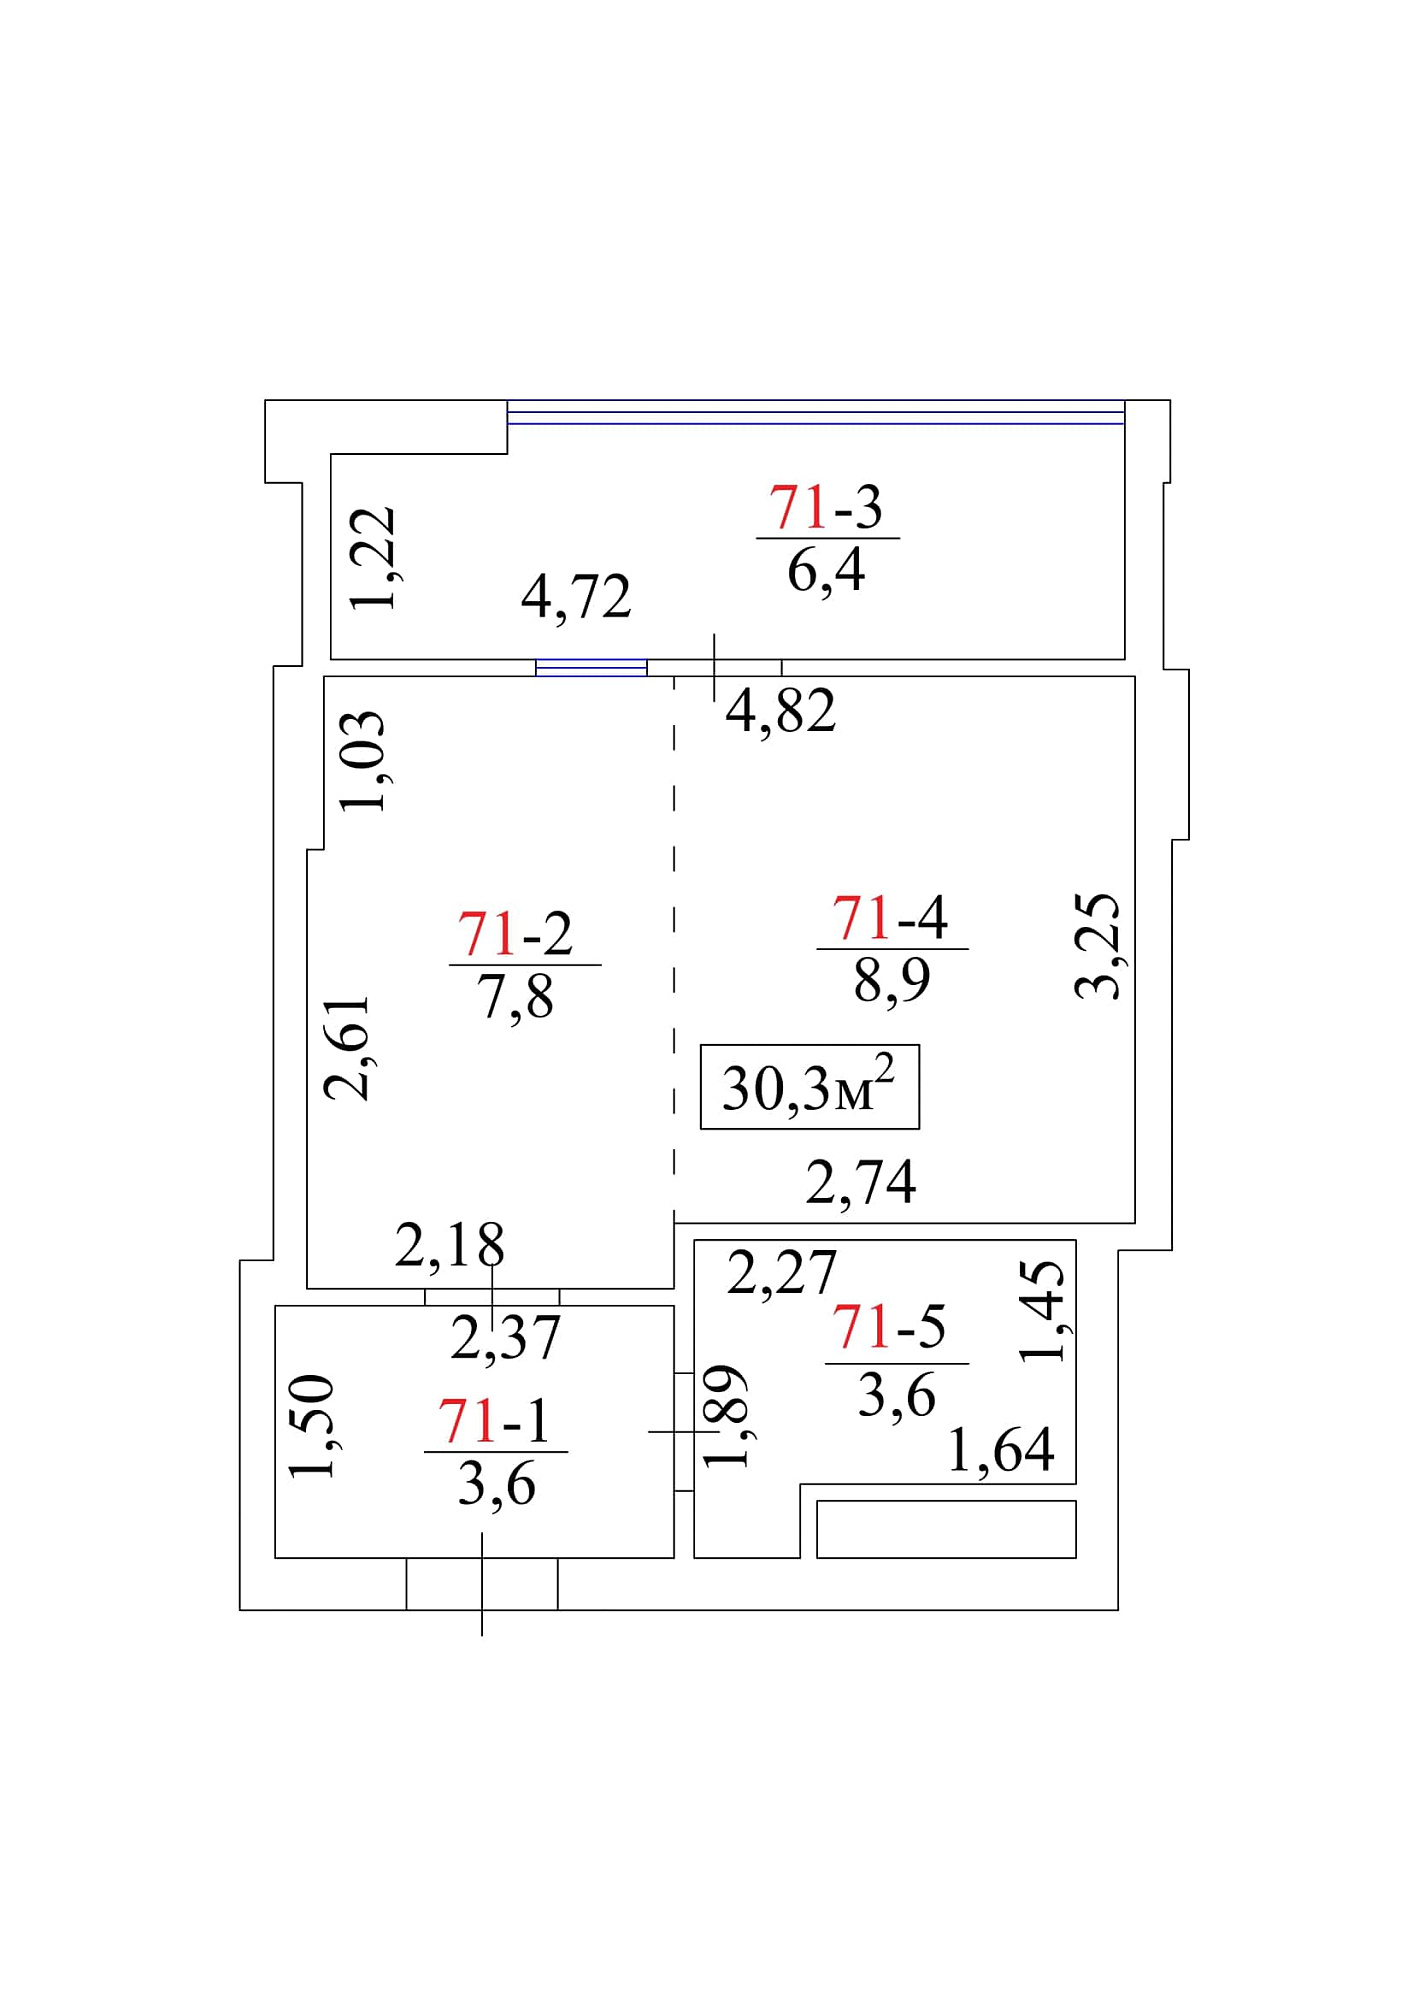 Planning Smart flats area 30.3m2, AB-01-08/00067.